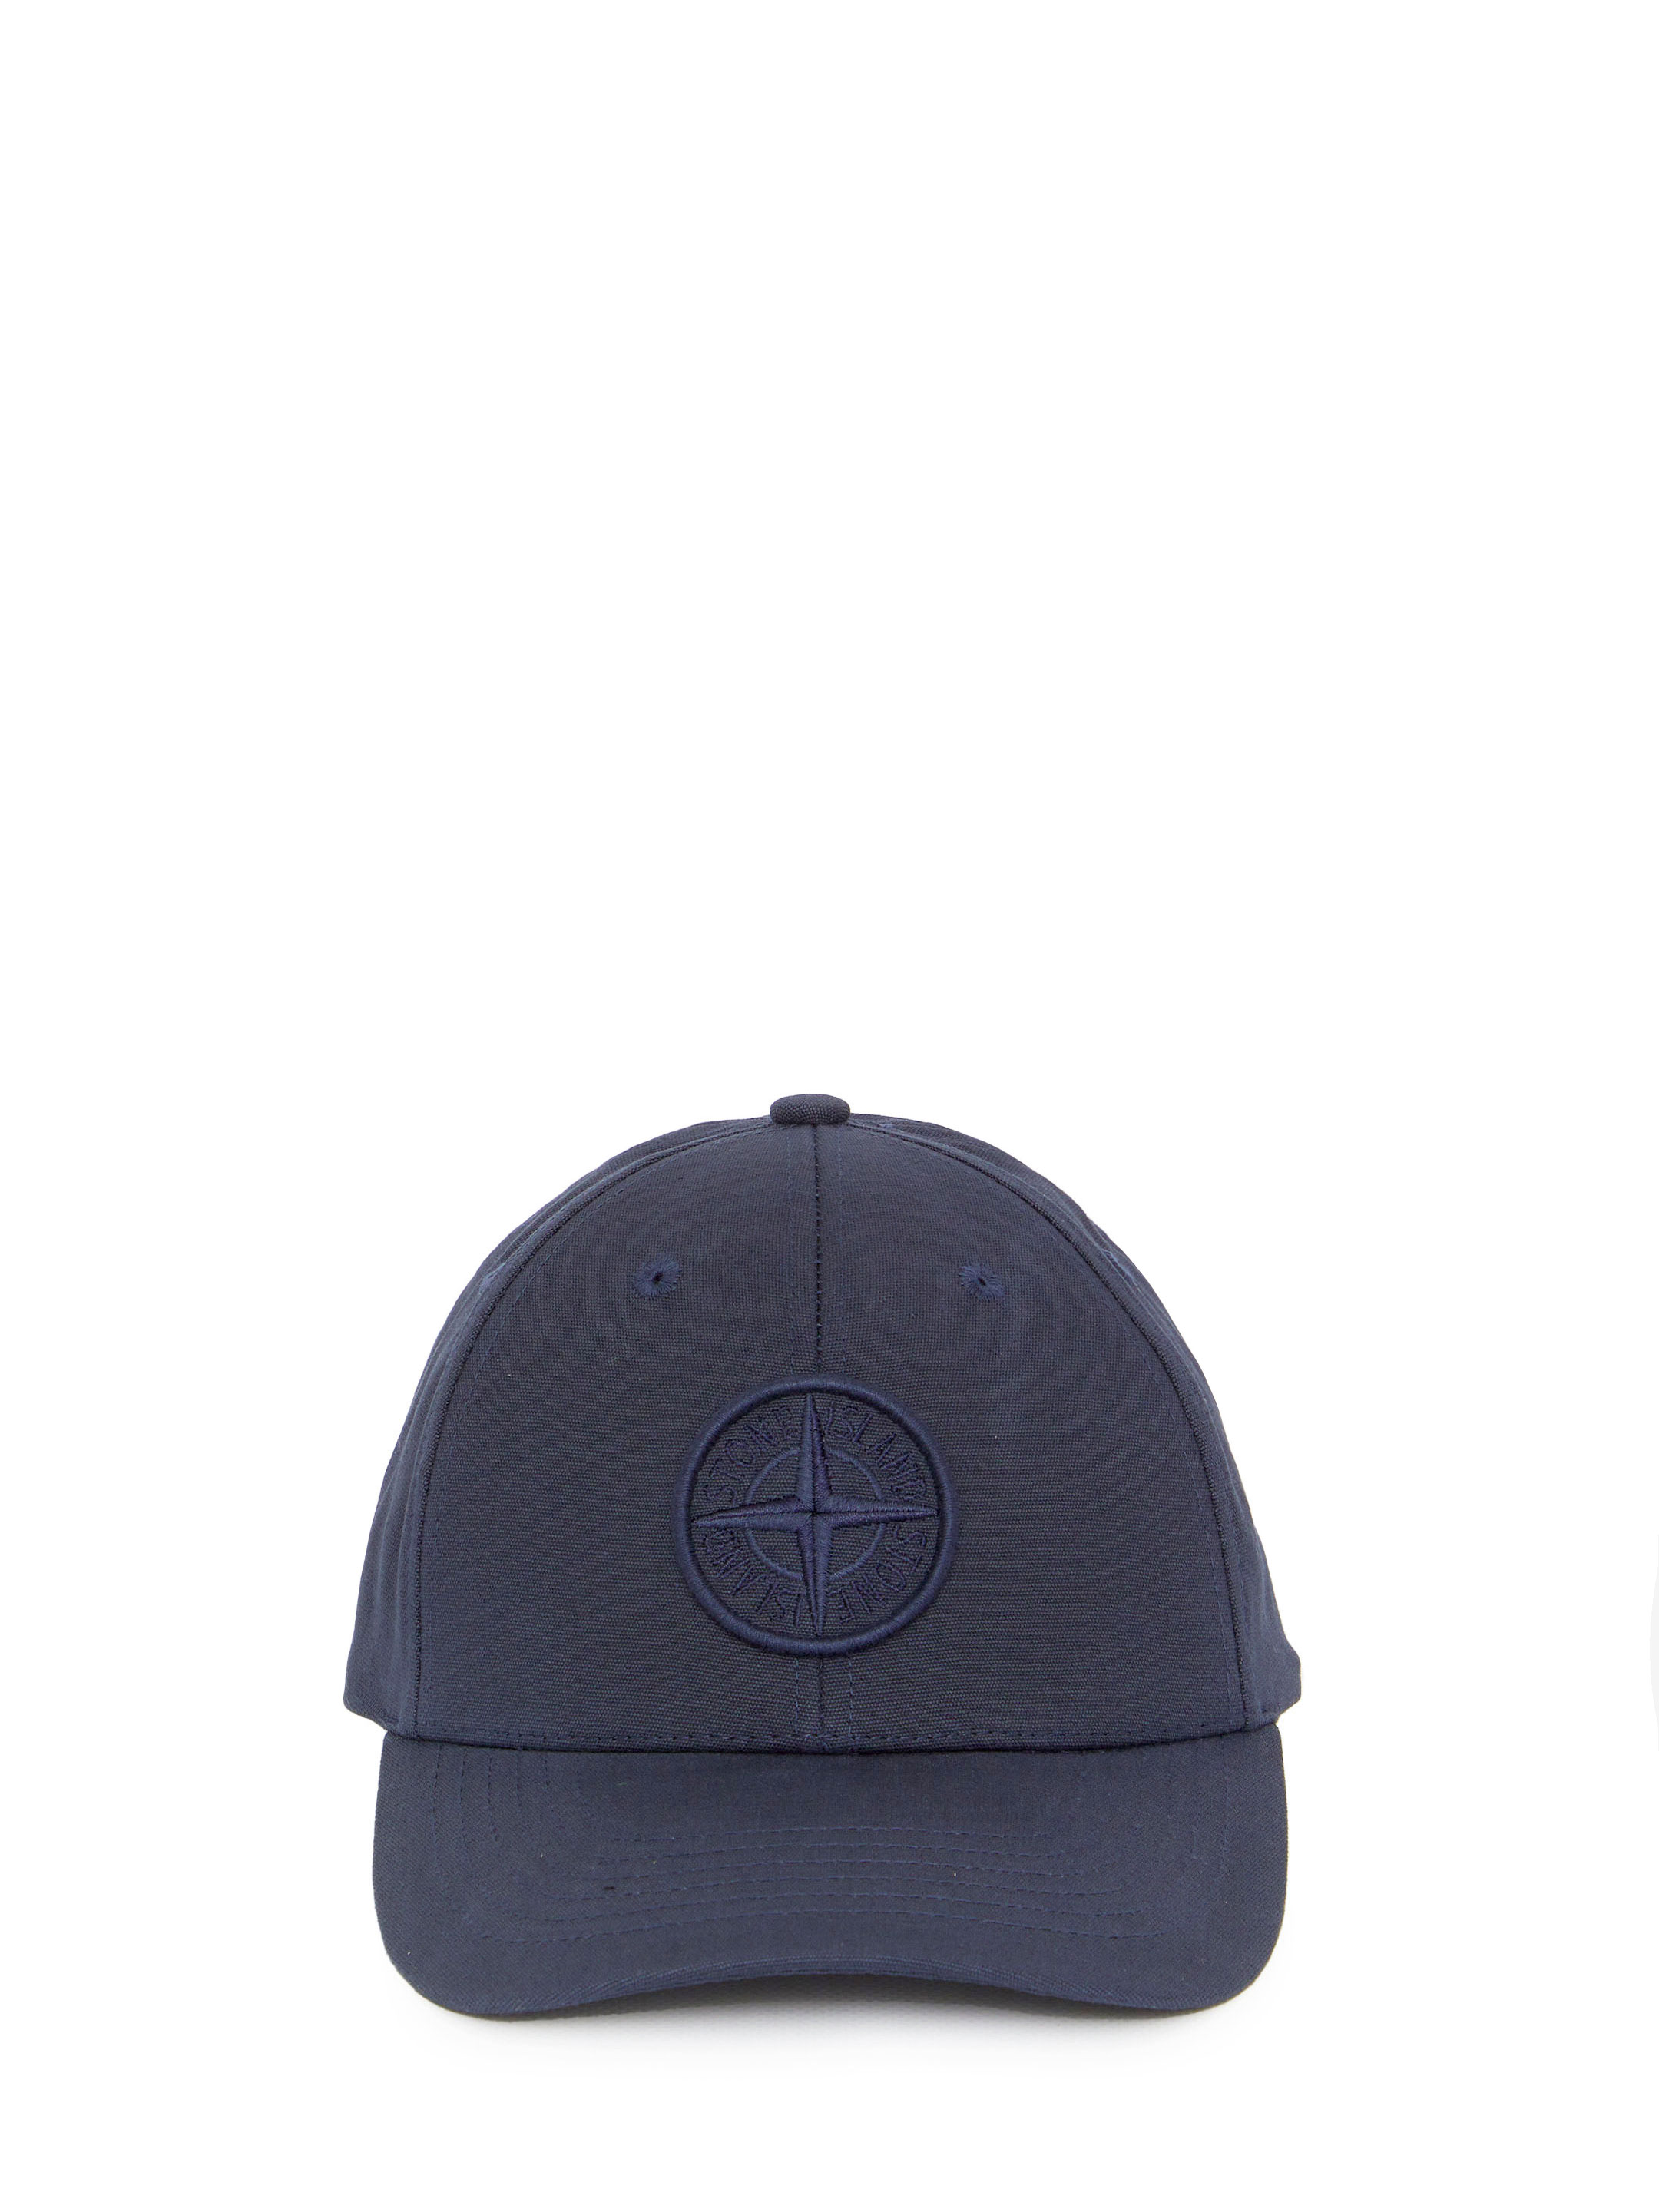 STONE ISLAND - Baseball cap with logo | Leam Roma - Luxury ...